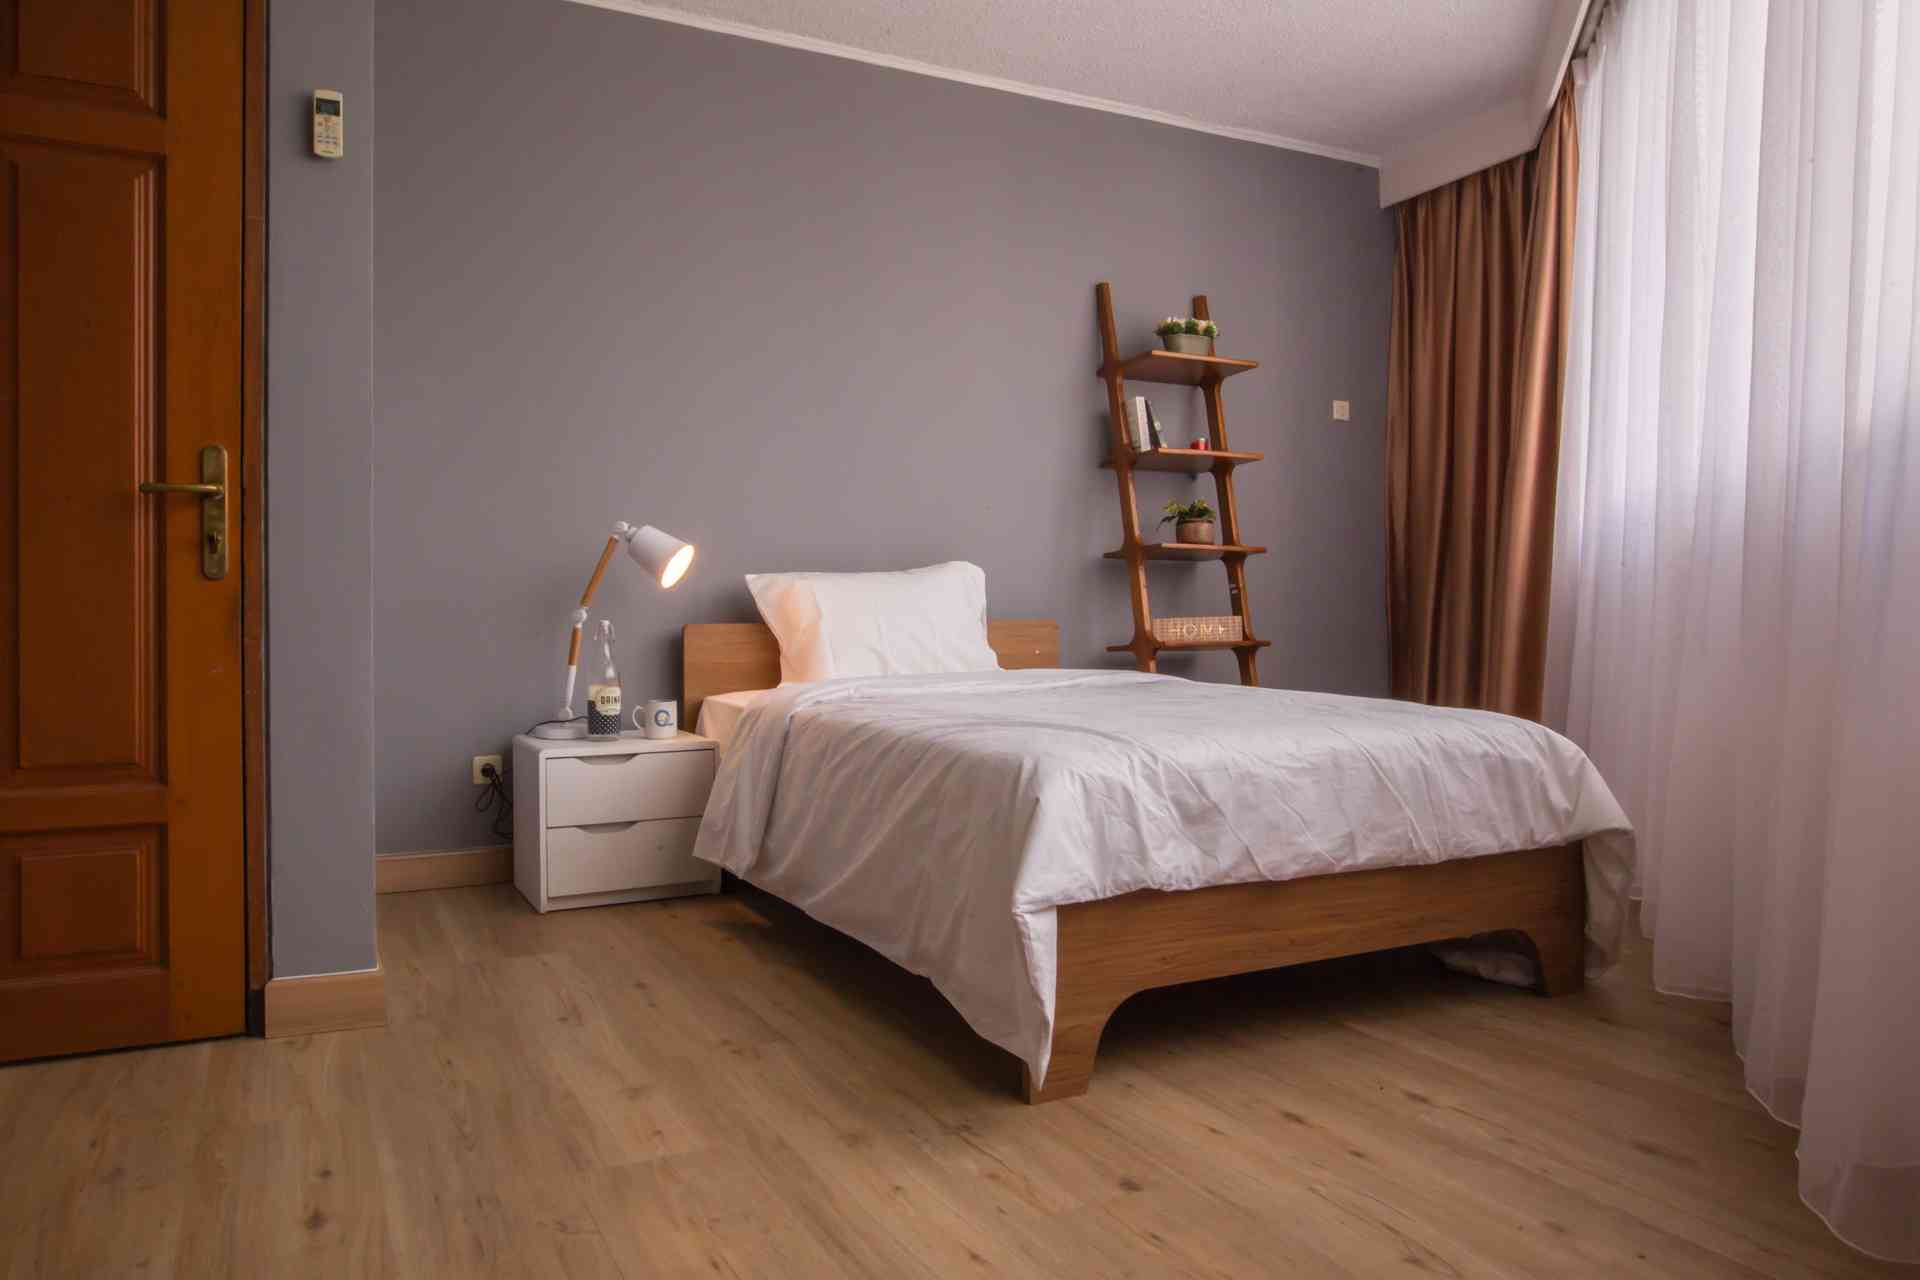 3 Bedroom on 3rd Floor for Rent in Senopati Apartment - fse6b7 4